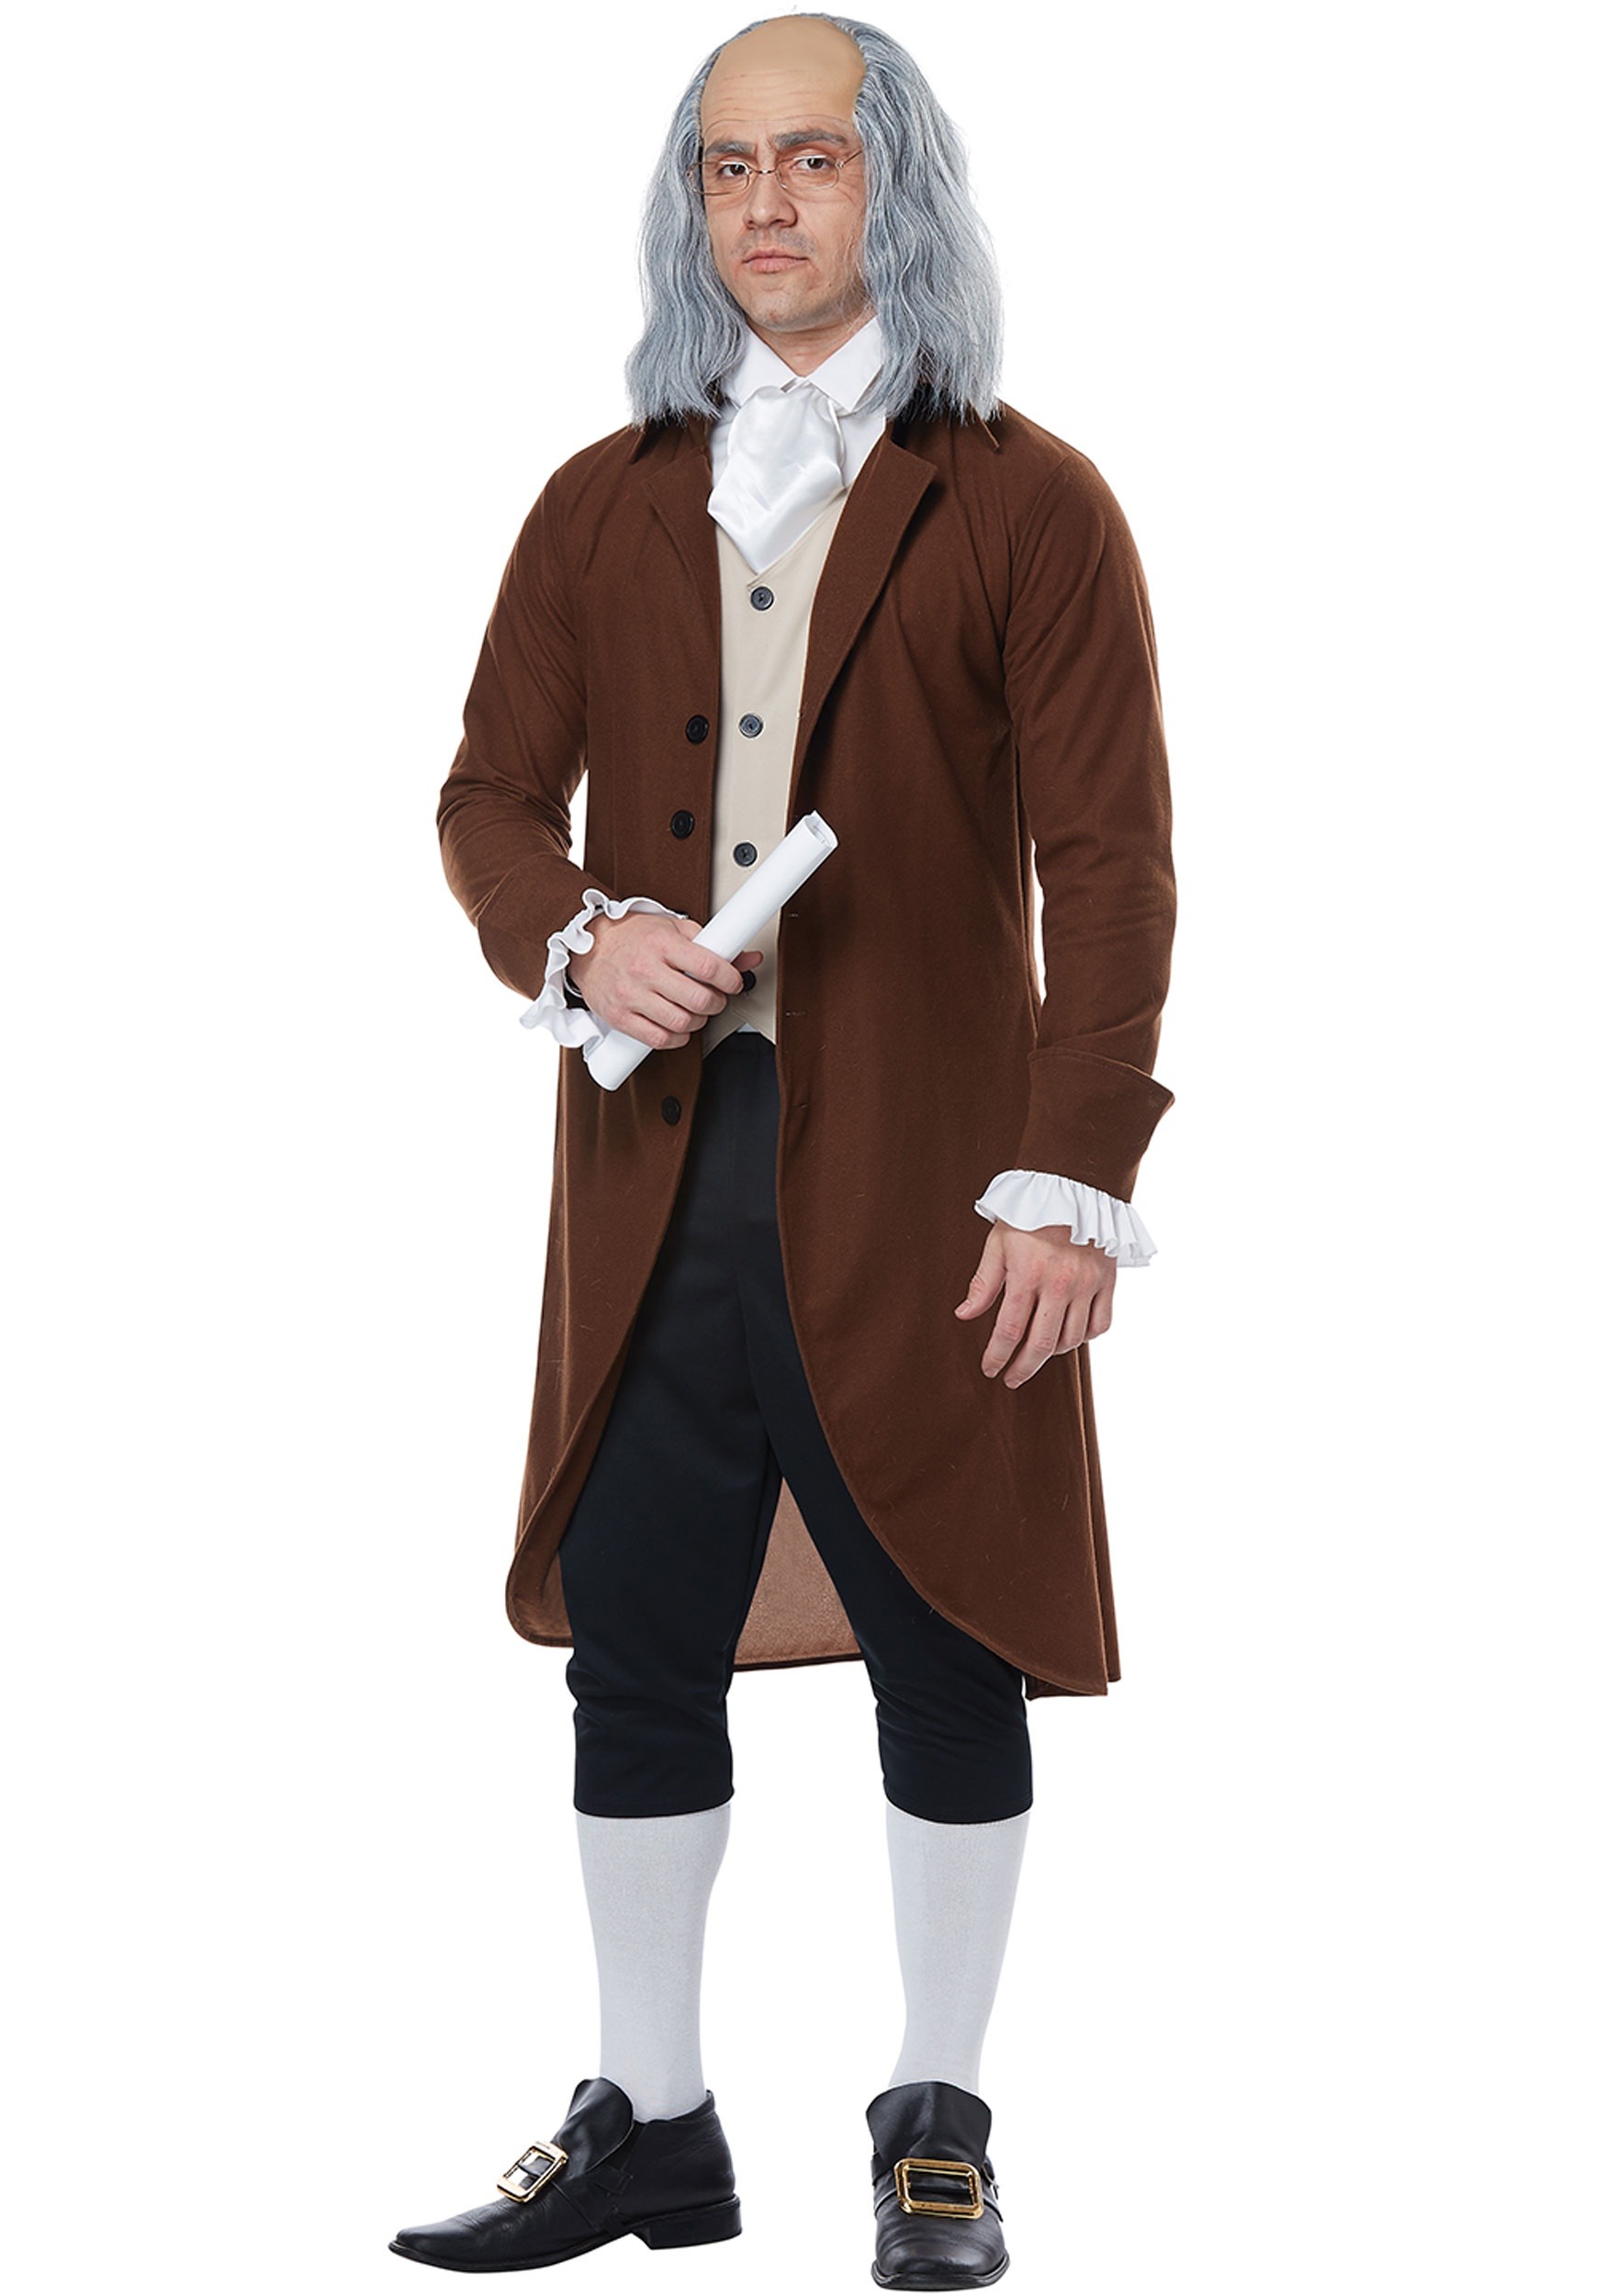 Benjamin Franklin Costume for Adults